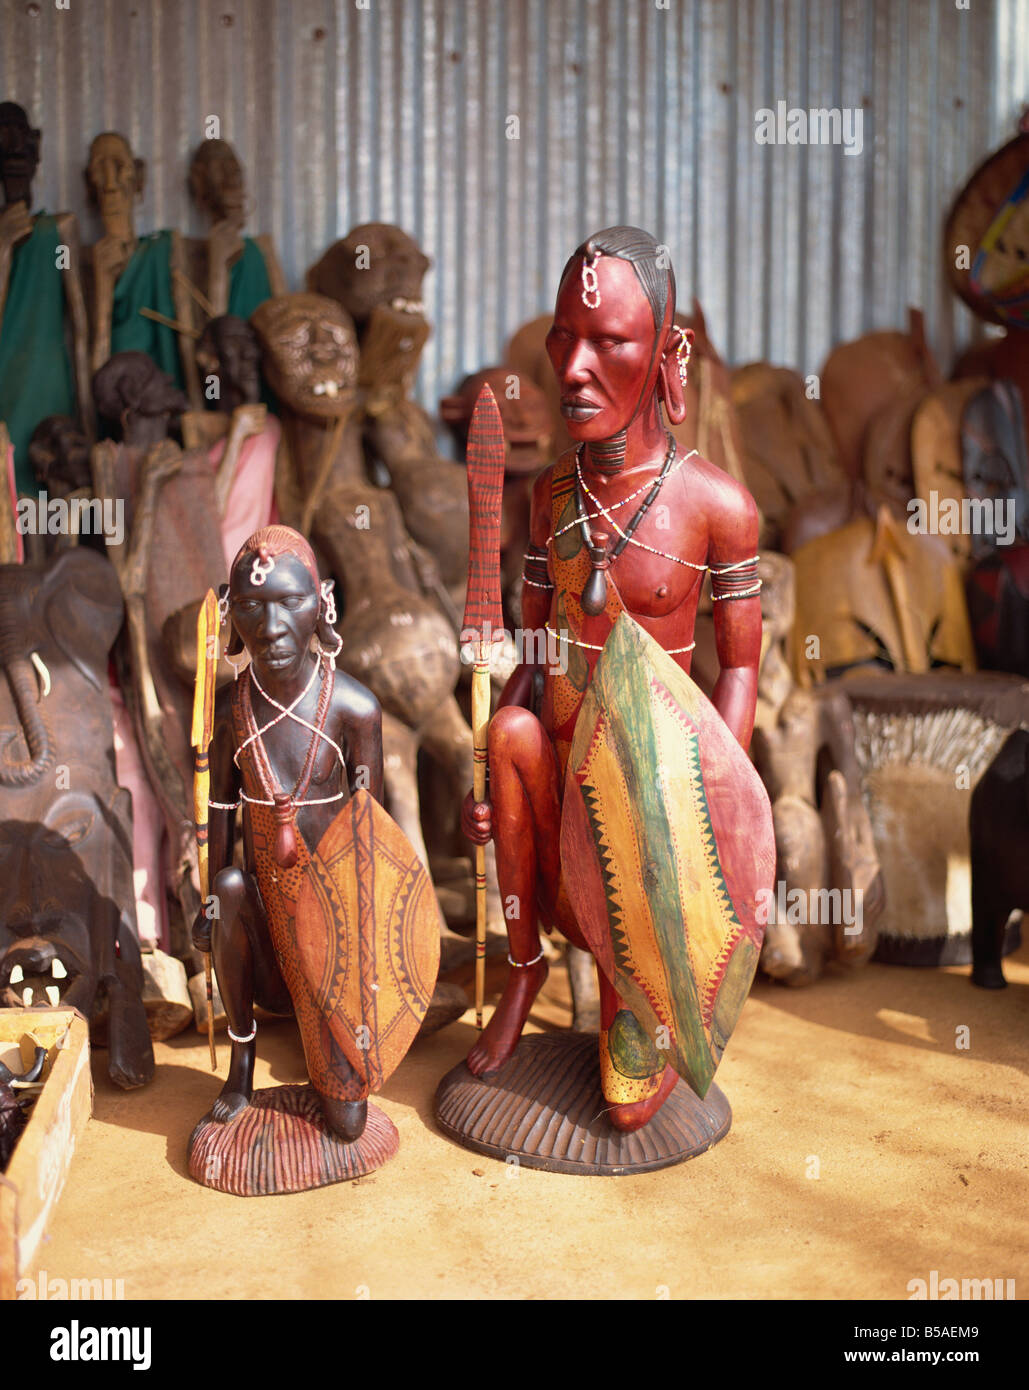 Maasai Kunsthandwerk zum Verkauf in der Nähe von Tsavo Nationalpark Kenia Ostafrika Afrika Stockfoto